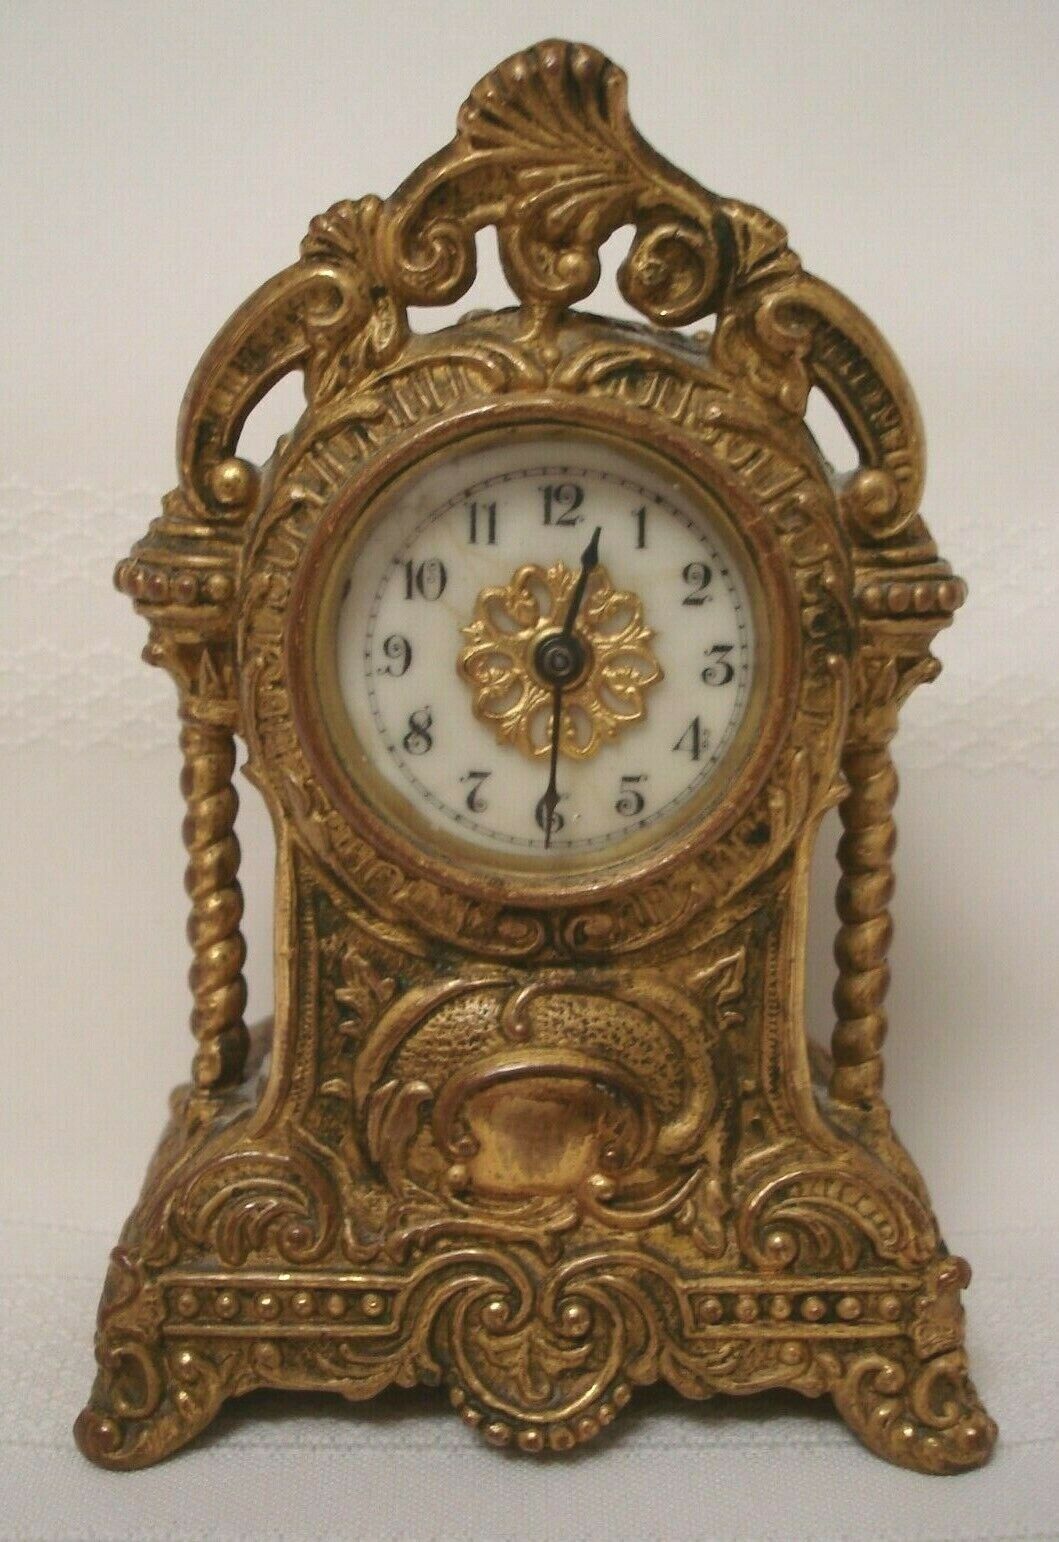 ANTIQUE sm ORNATE DESK CARRIAGE CLOCK WATERBURY CLOCK CO Pat. 1894